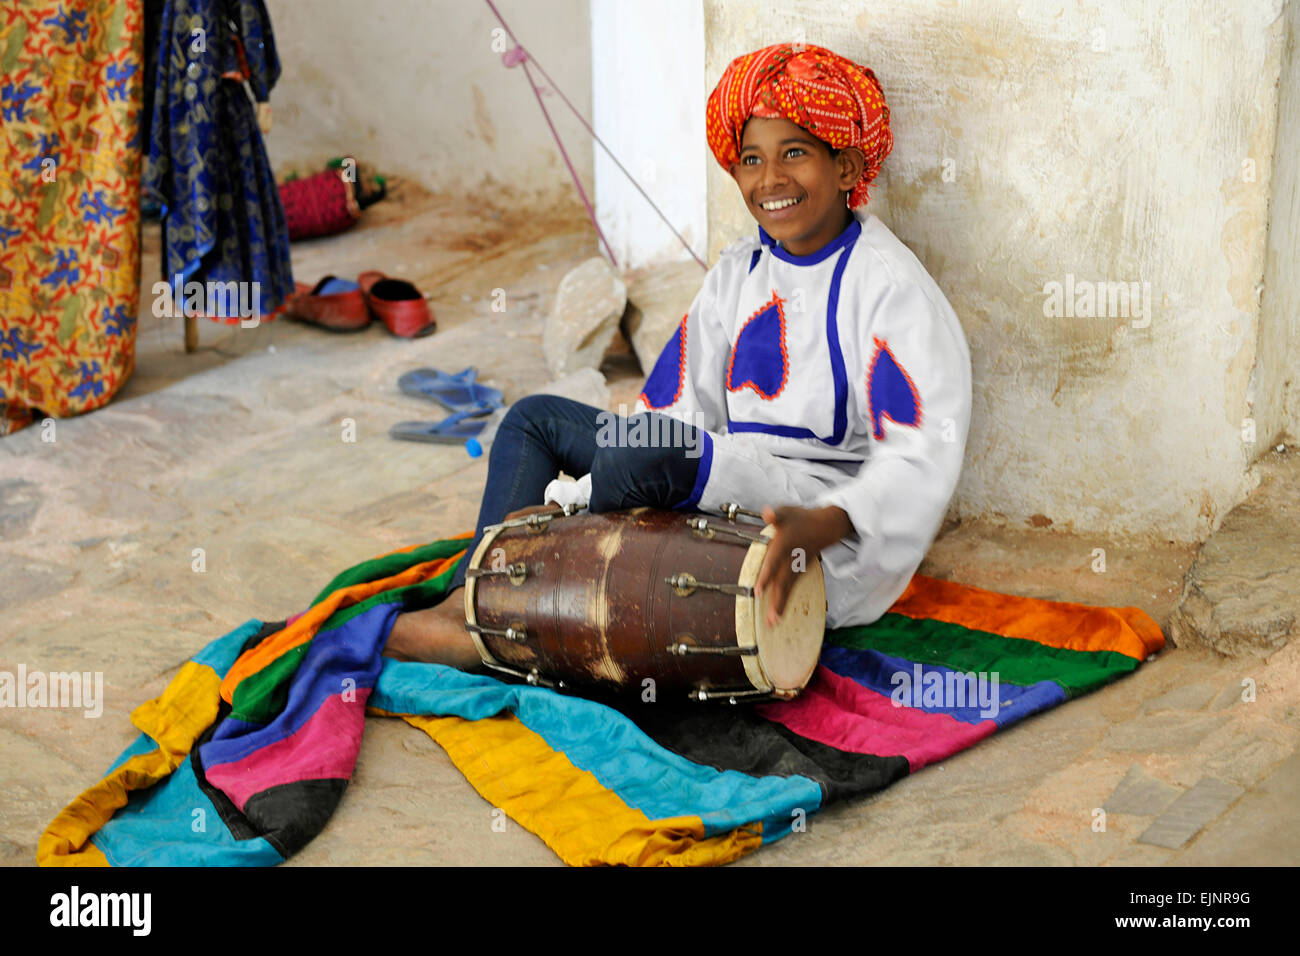 Joven Cantante/músico/músico callejero en el Fuerte Amber & Fuerte Amber Jaipur Rajastán Jaipur Rajastán India Foto de stock